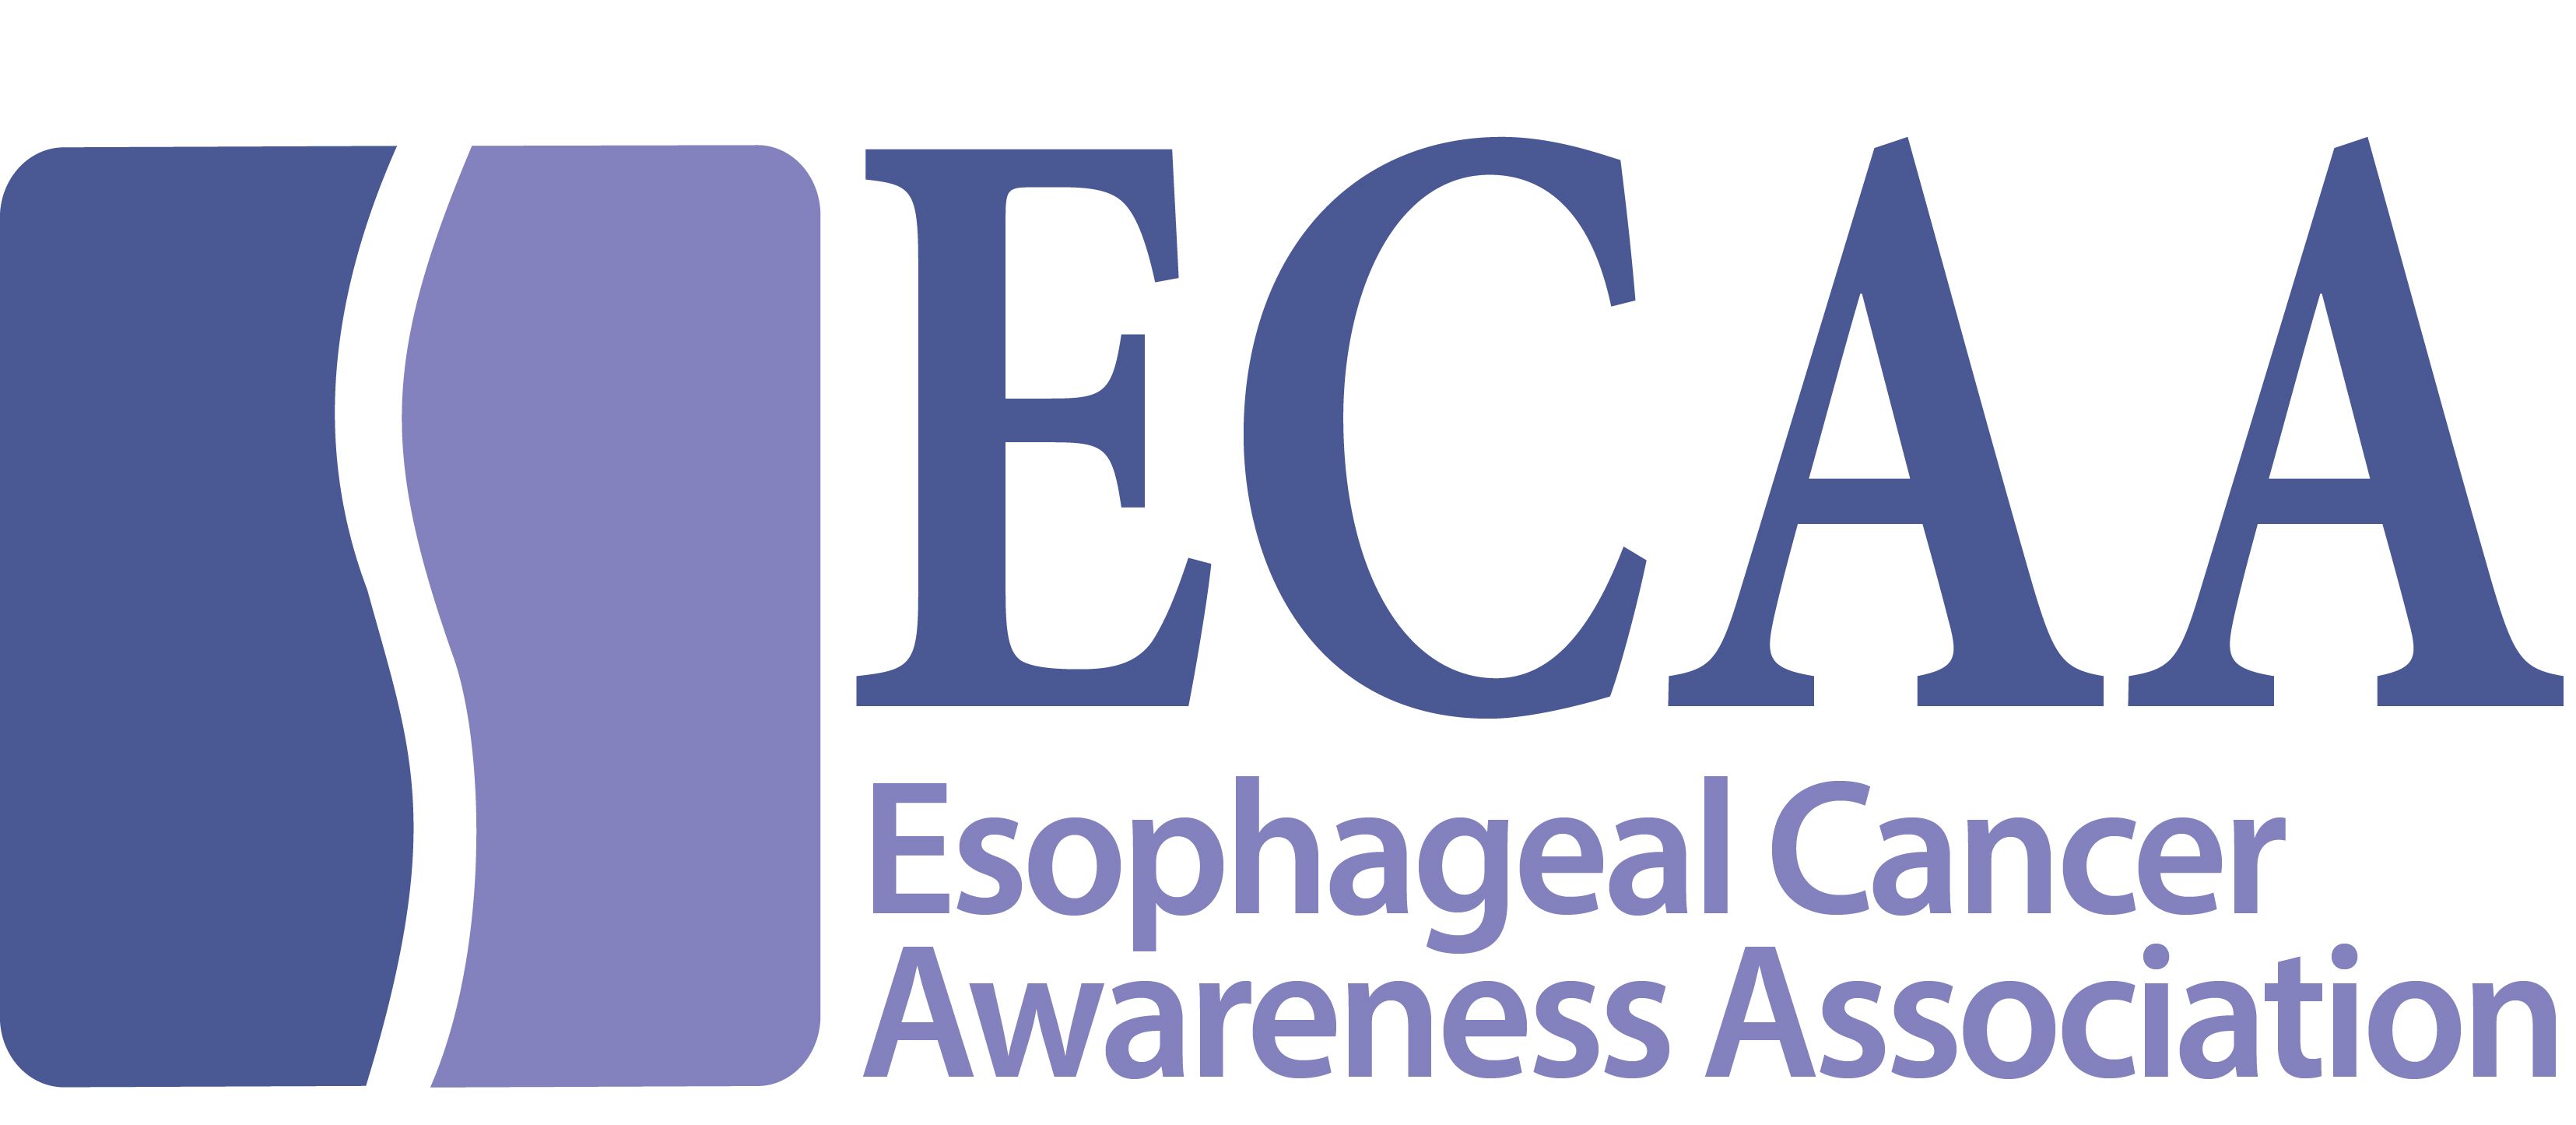 Esophageal Cancer Awareness Association logo